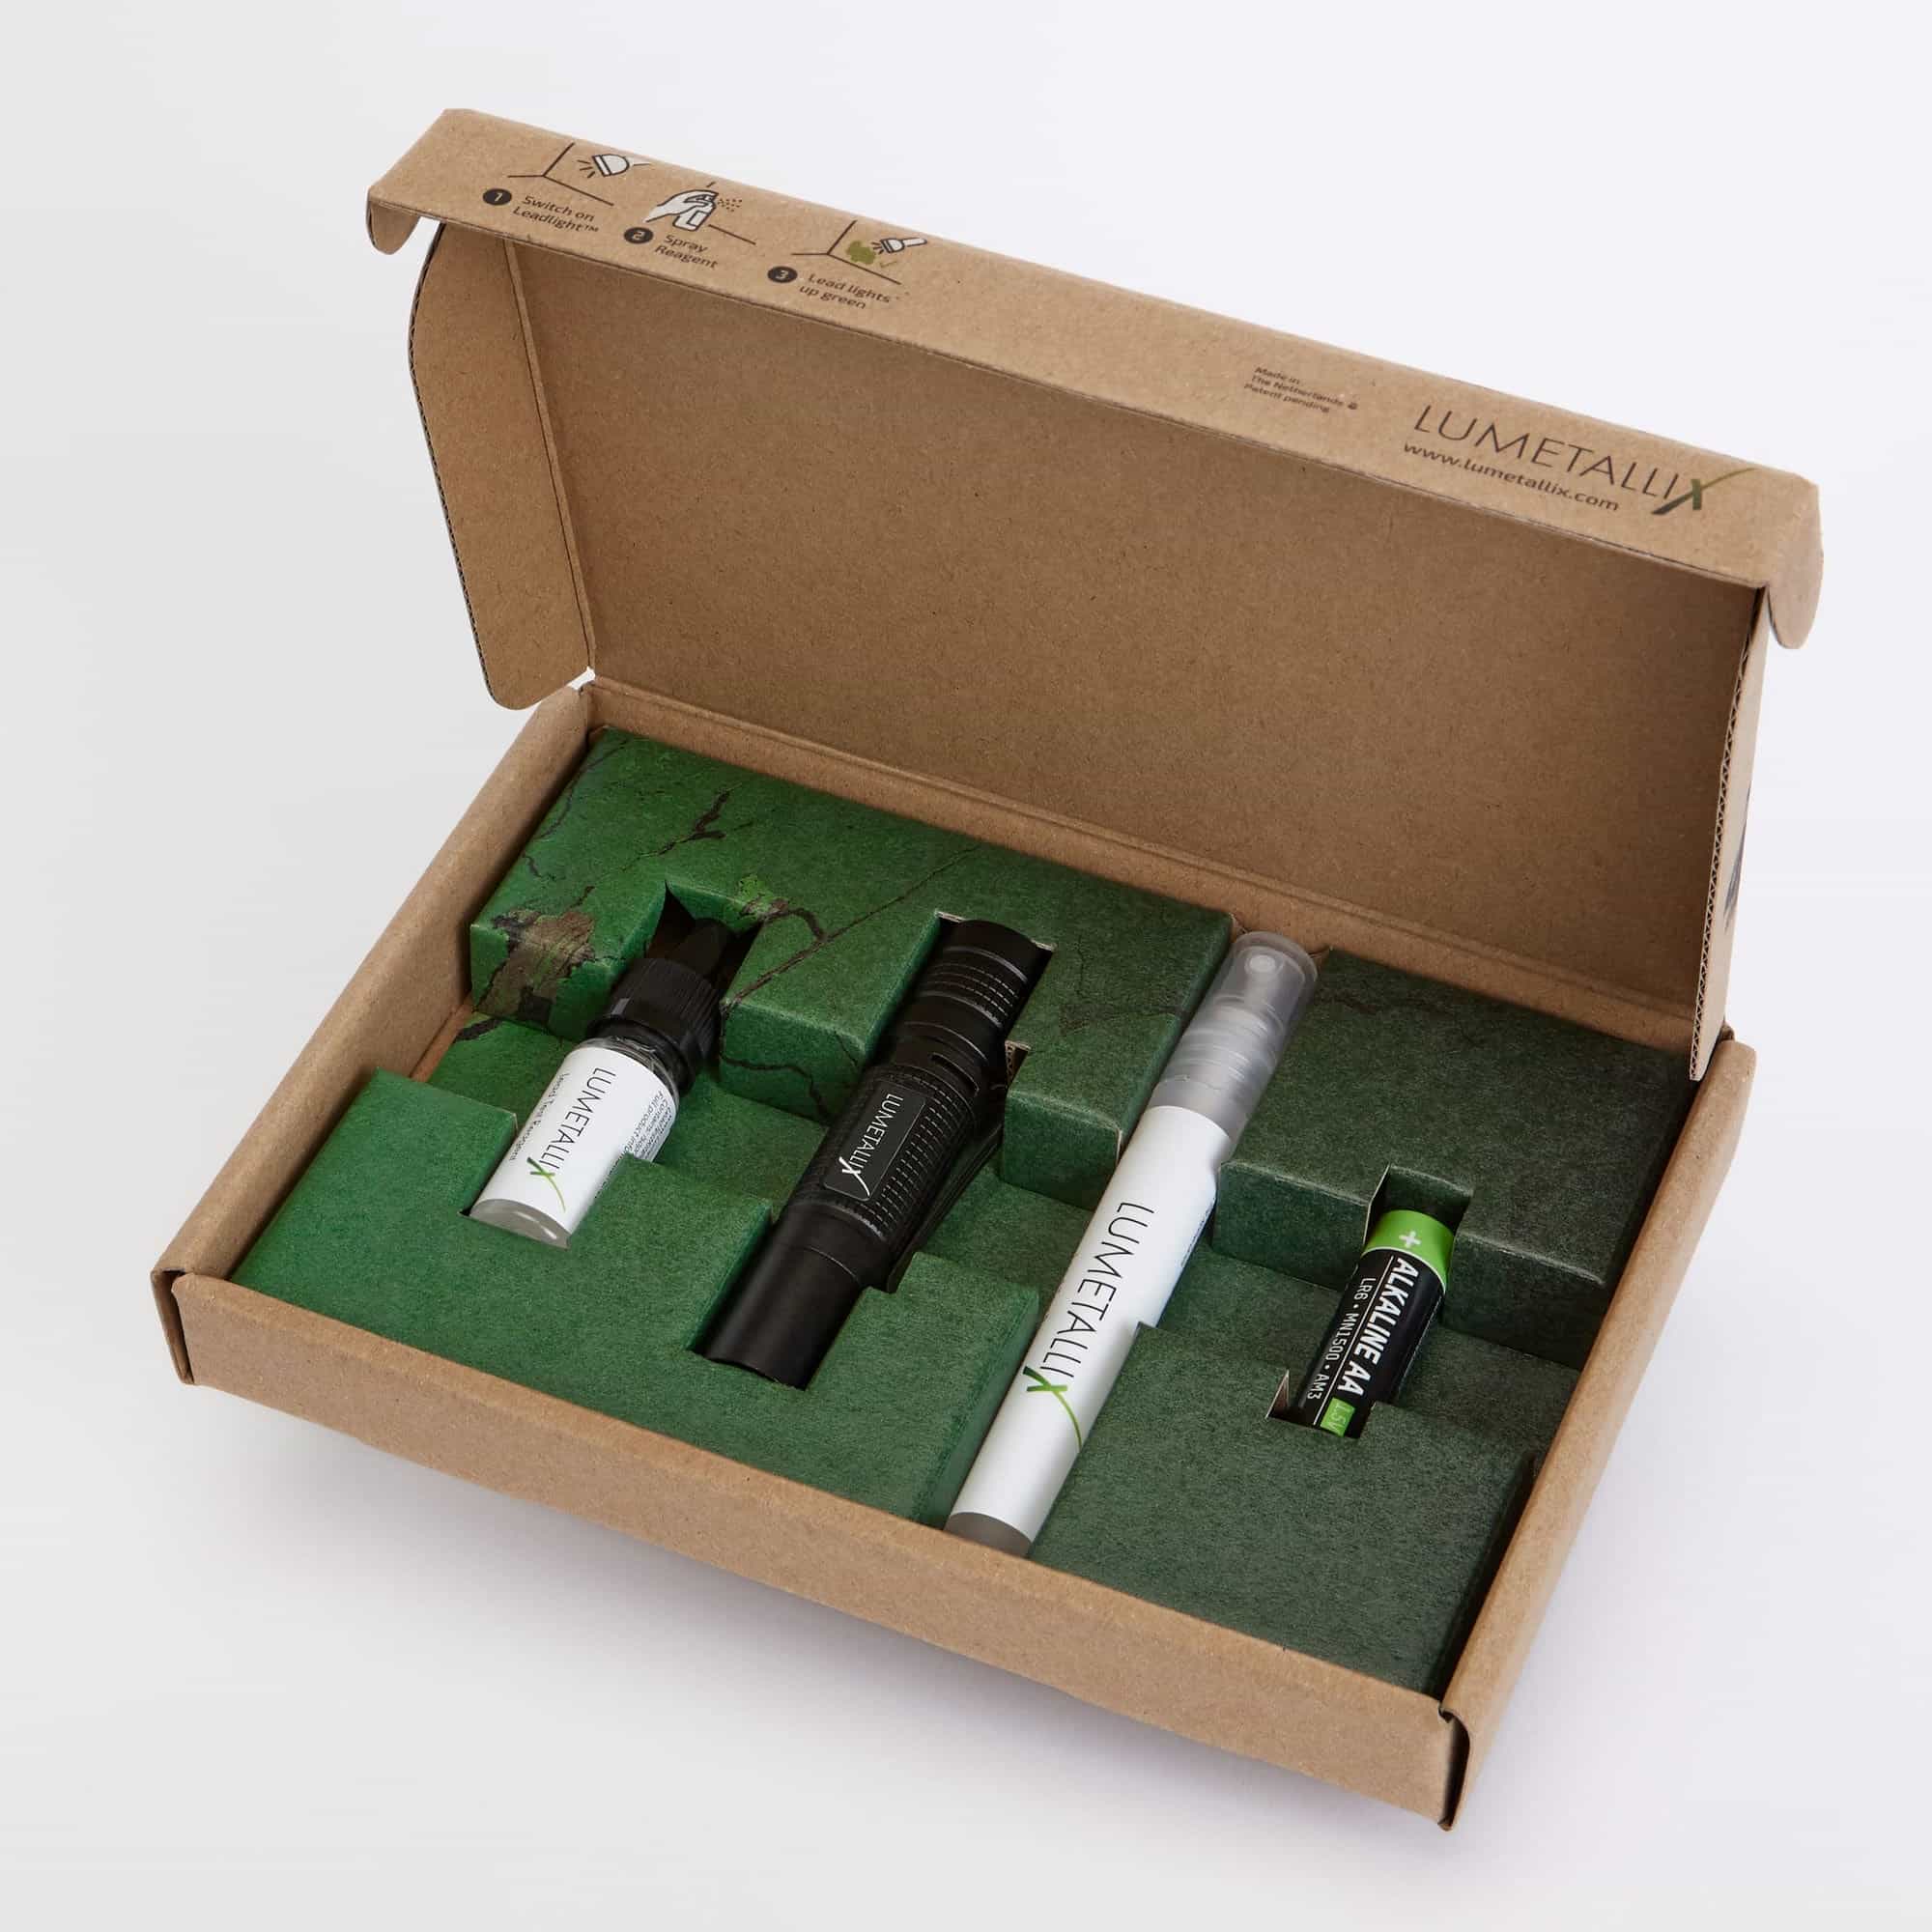 Open Lumetallix box with products: Lumetallix™ Reagent, Lumetallix™ LeadLight™ + Battery